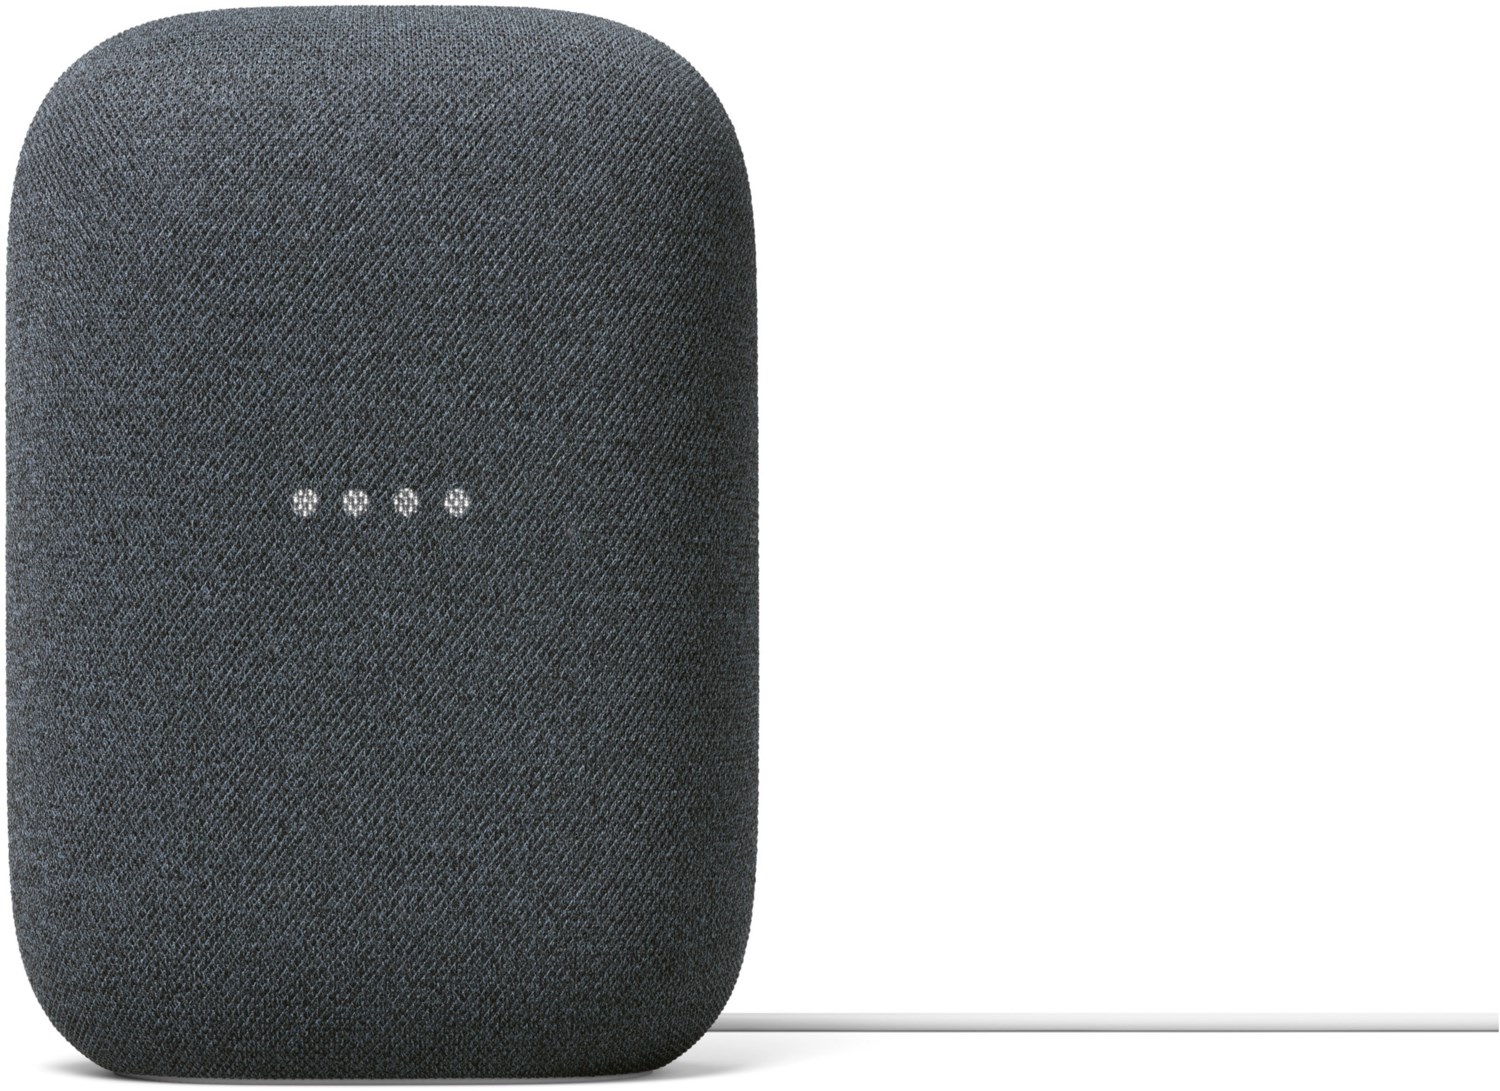 Image of Nest Audio Smart Speaker carbon